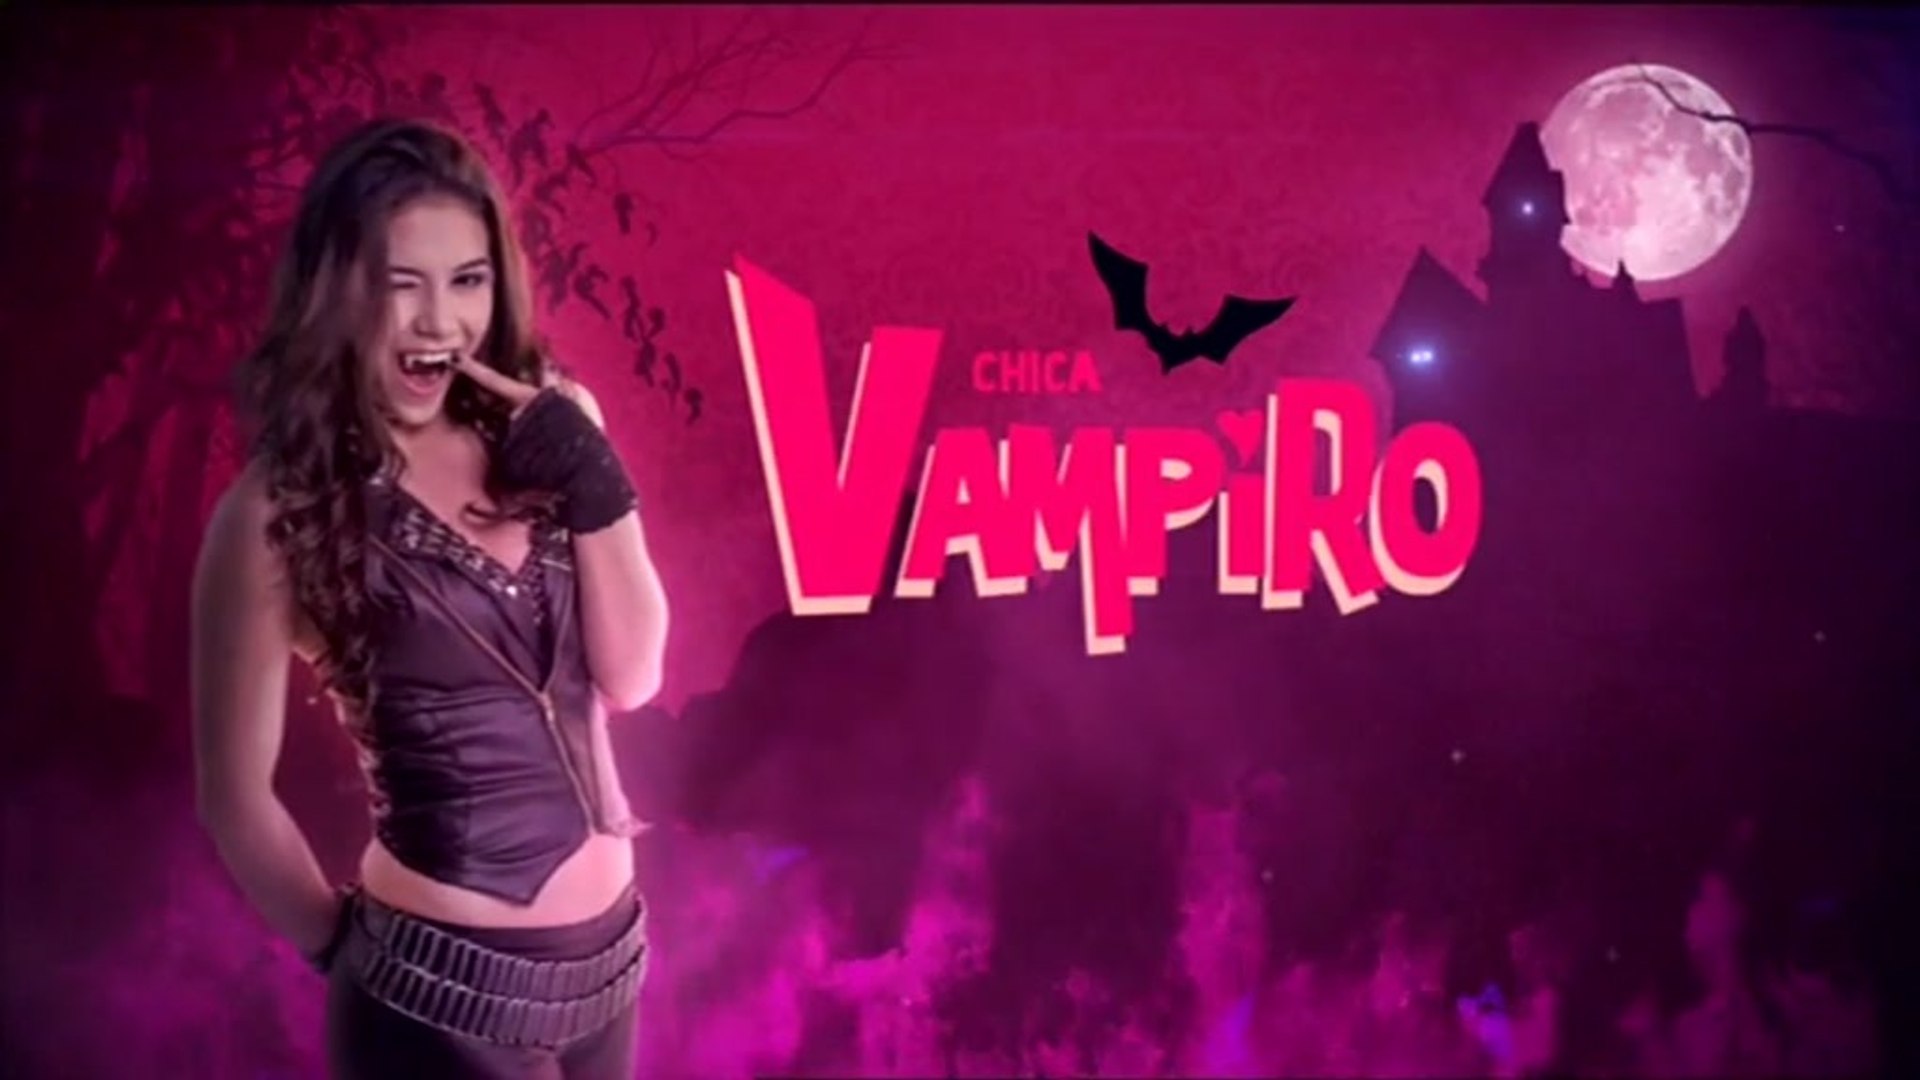 Chica Vampiro (Gulli) à partir du 31 août - Vidéo Dailymotion